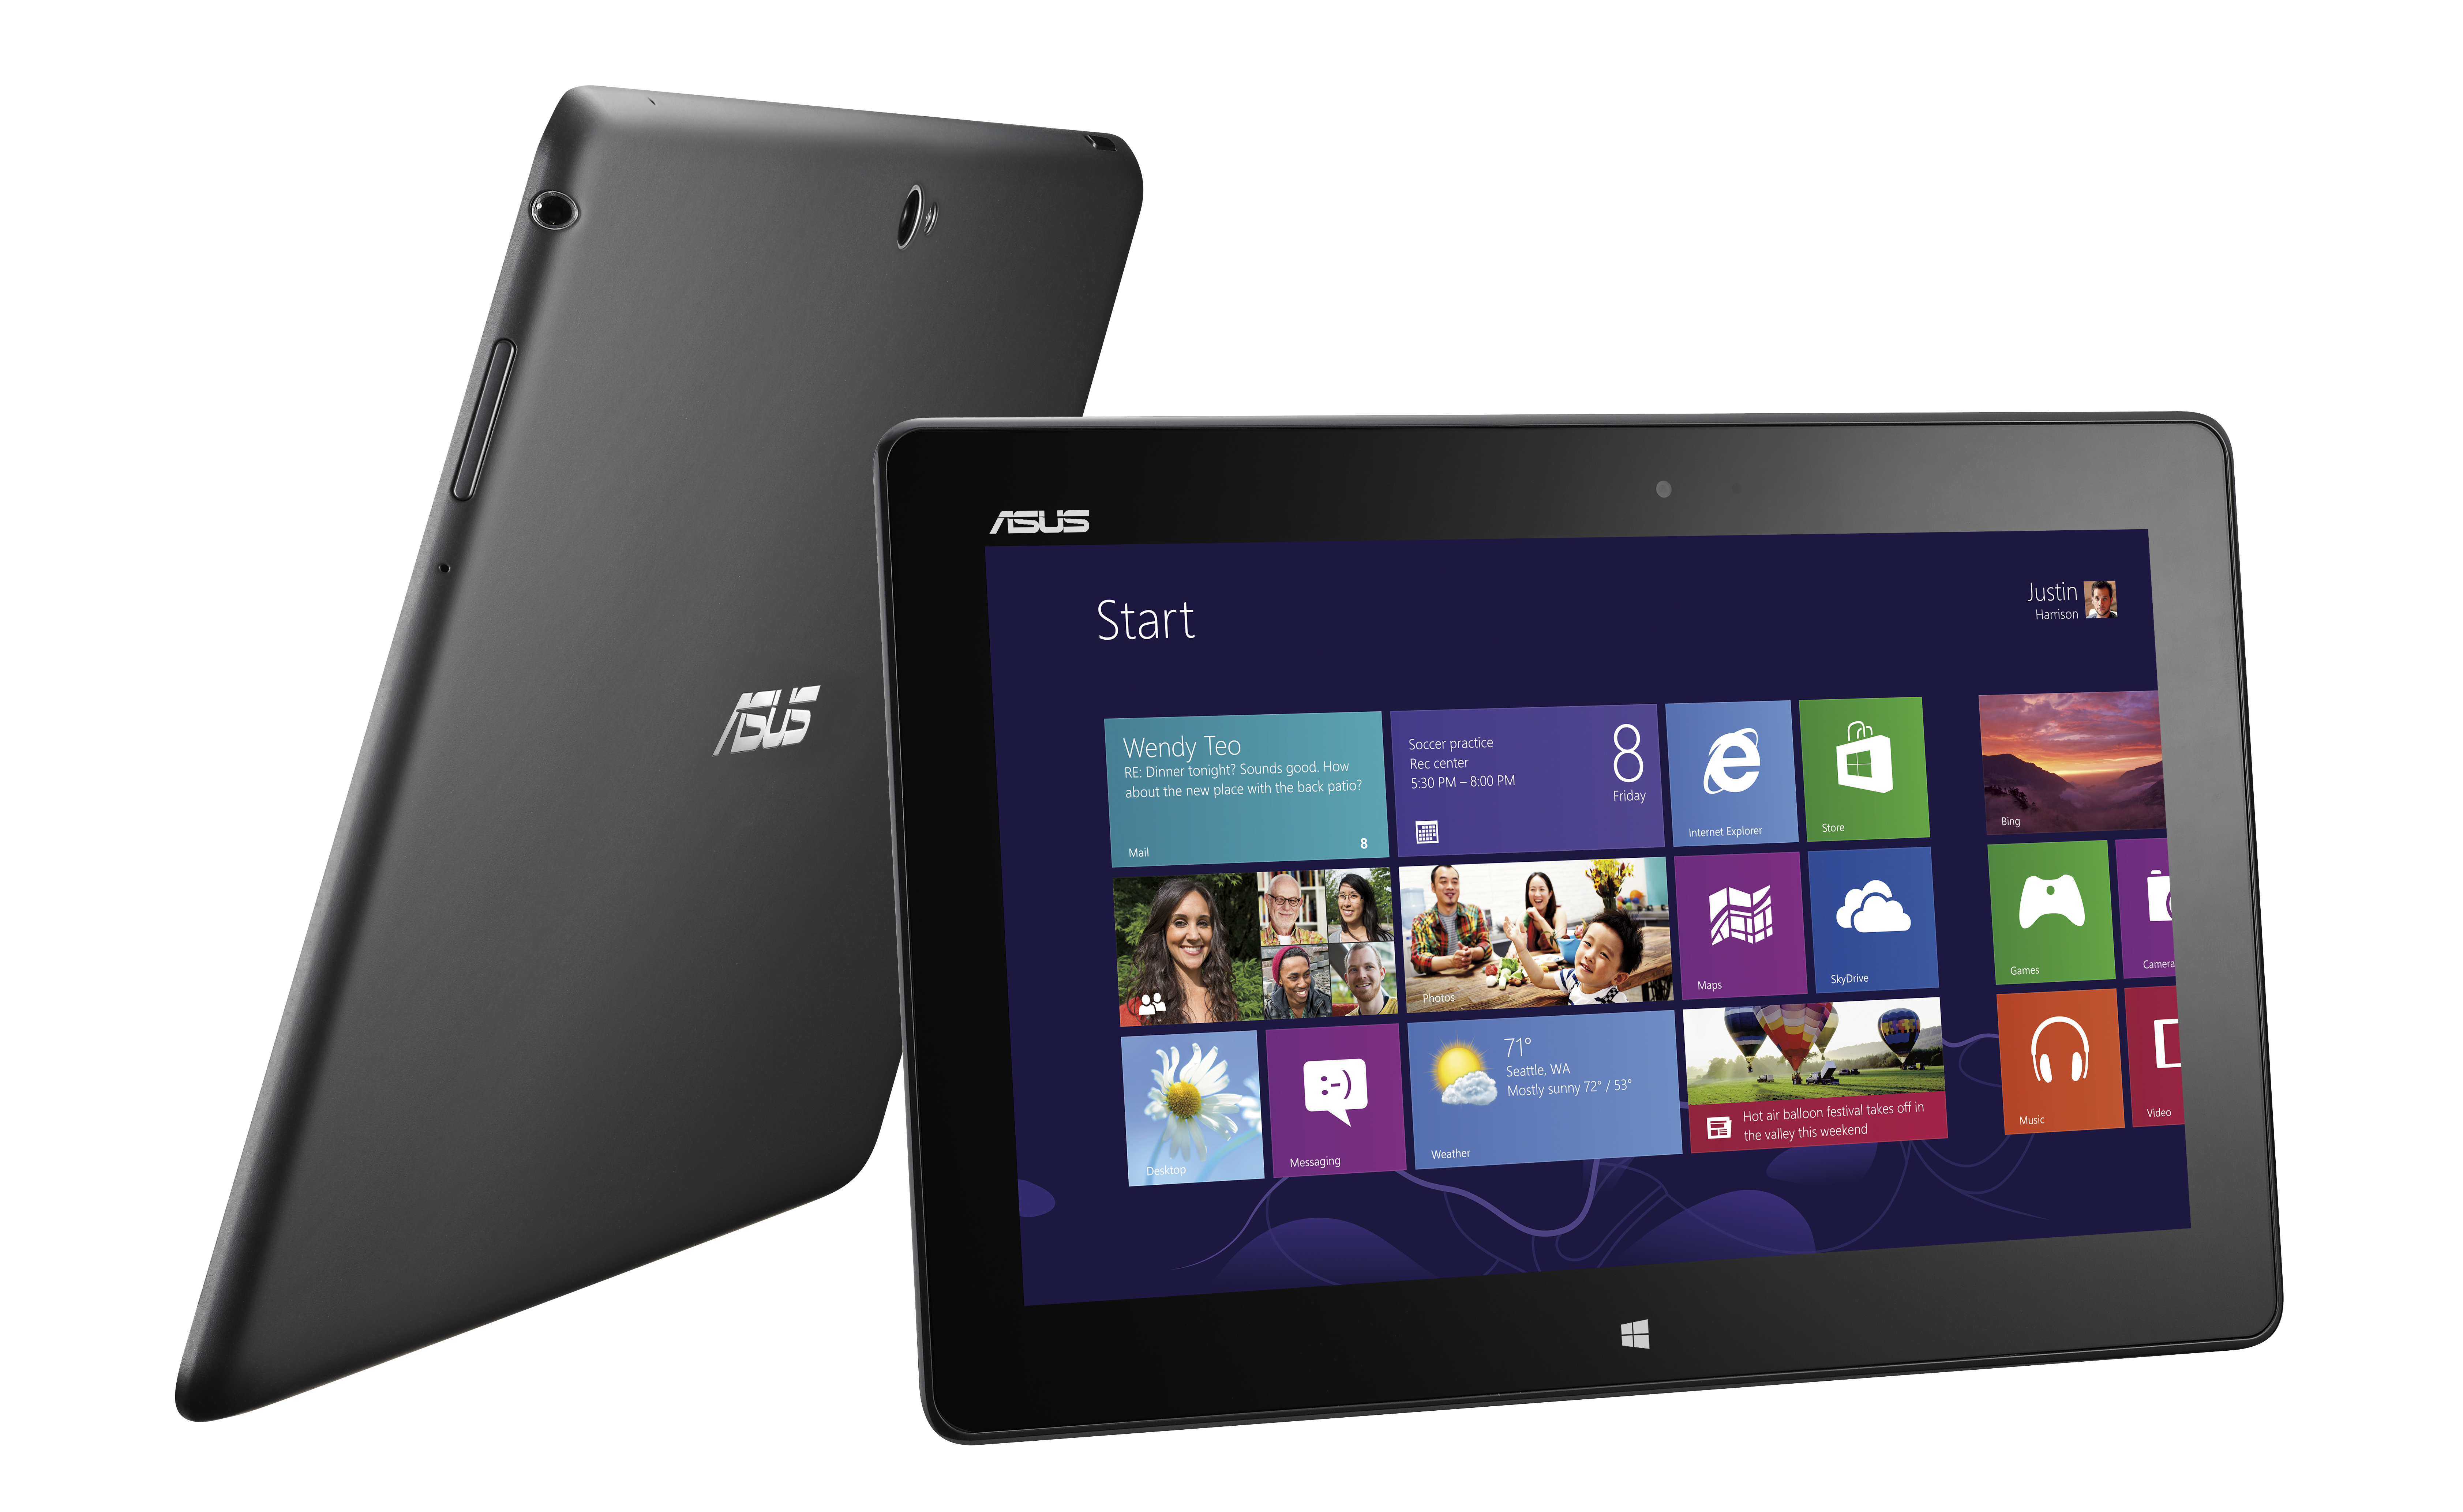 ASUS Presenta la VivoTab Smart con Windows 8 #2013CES